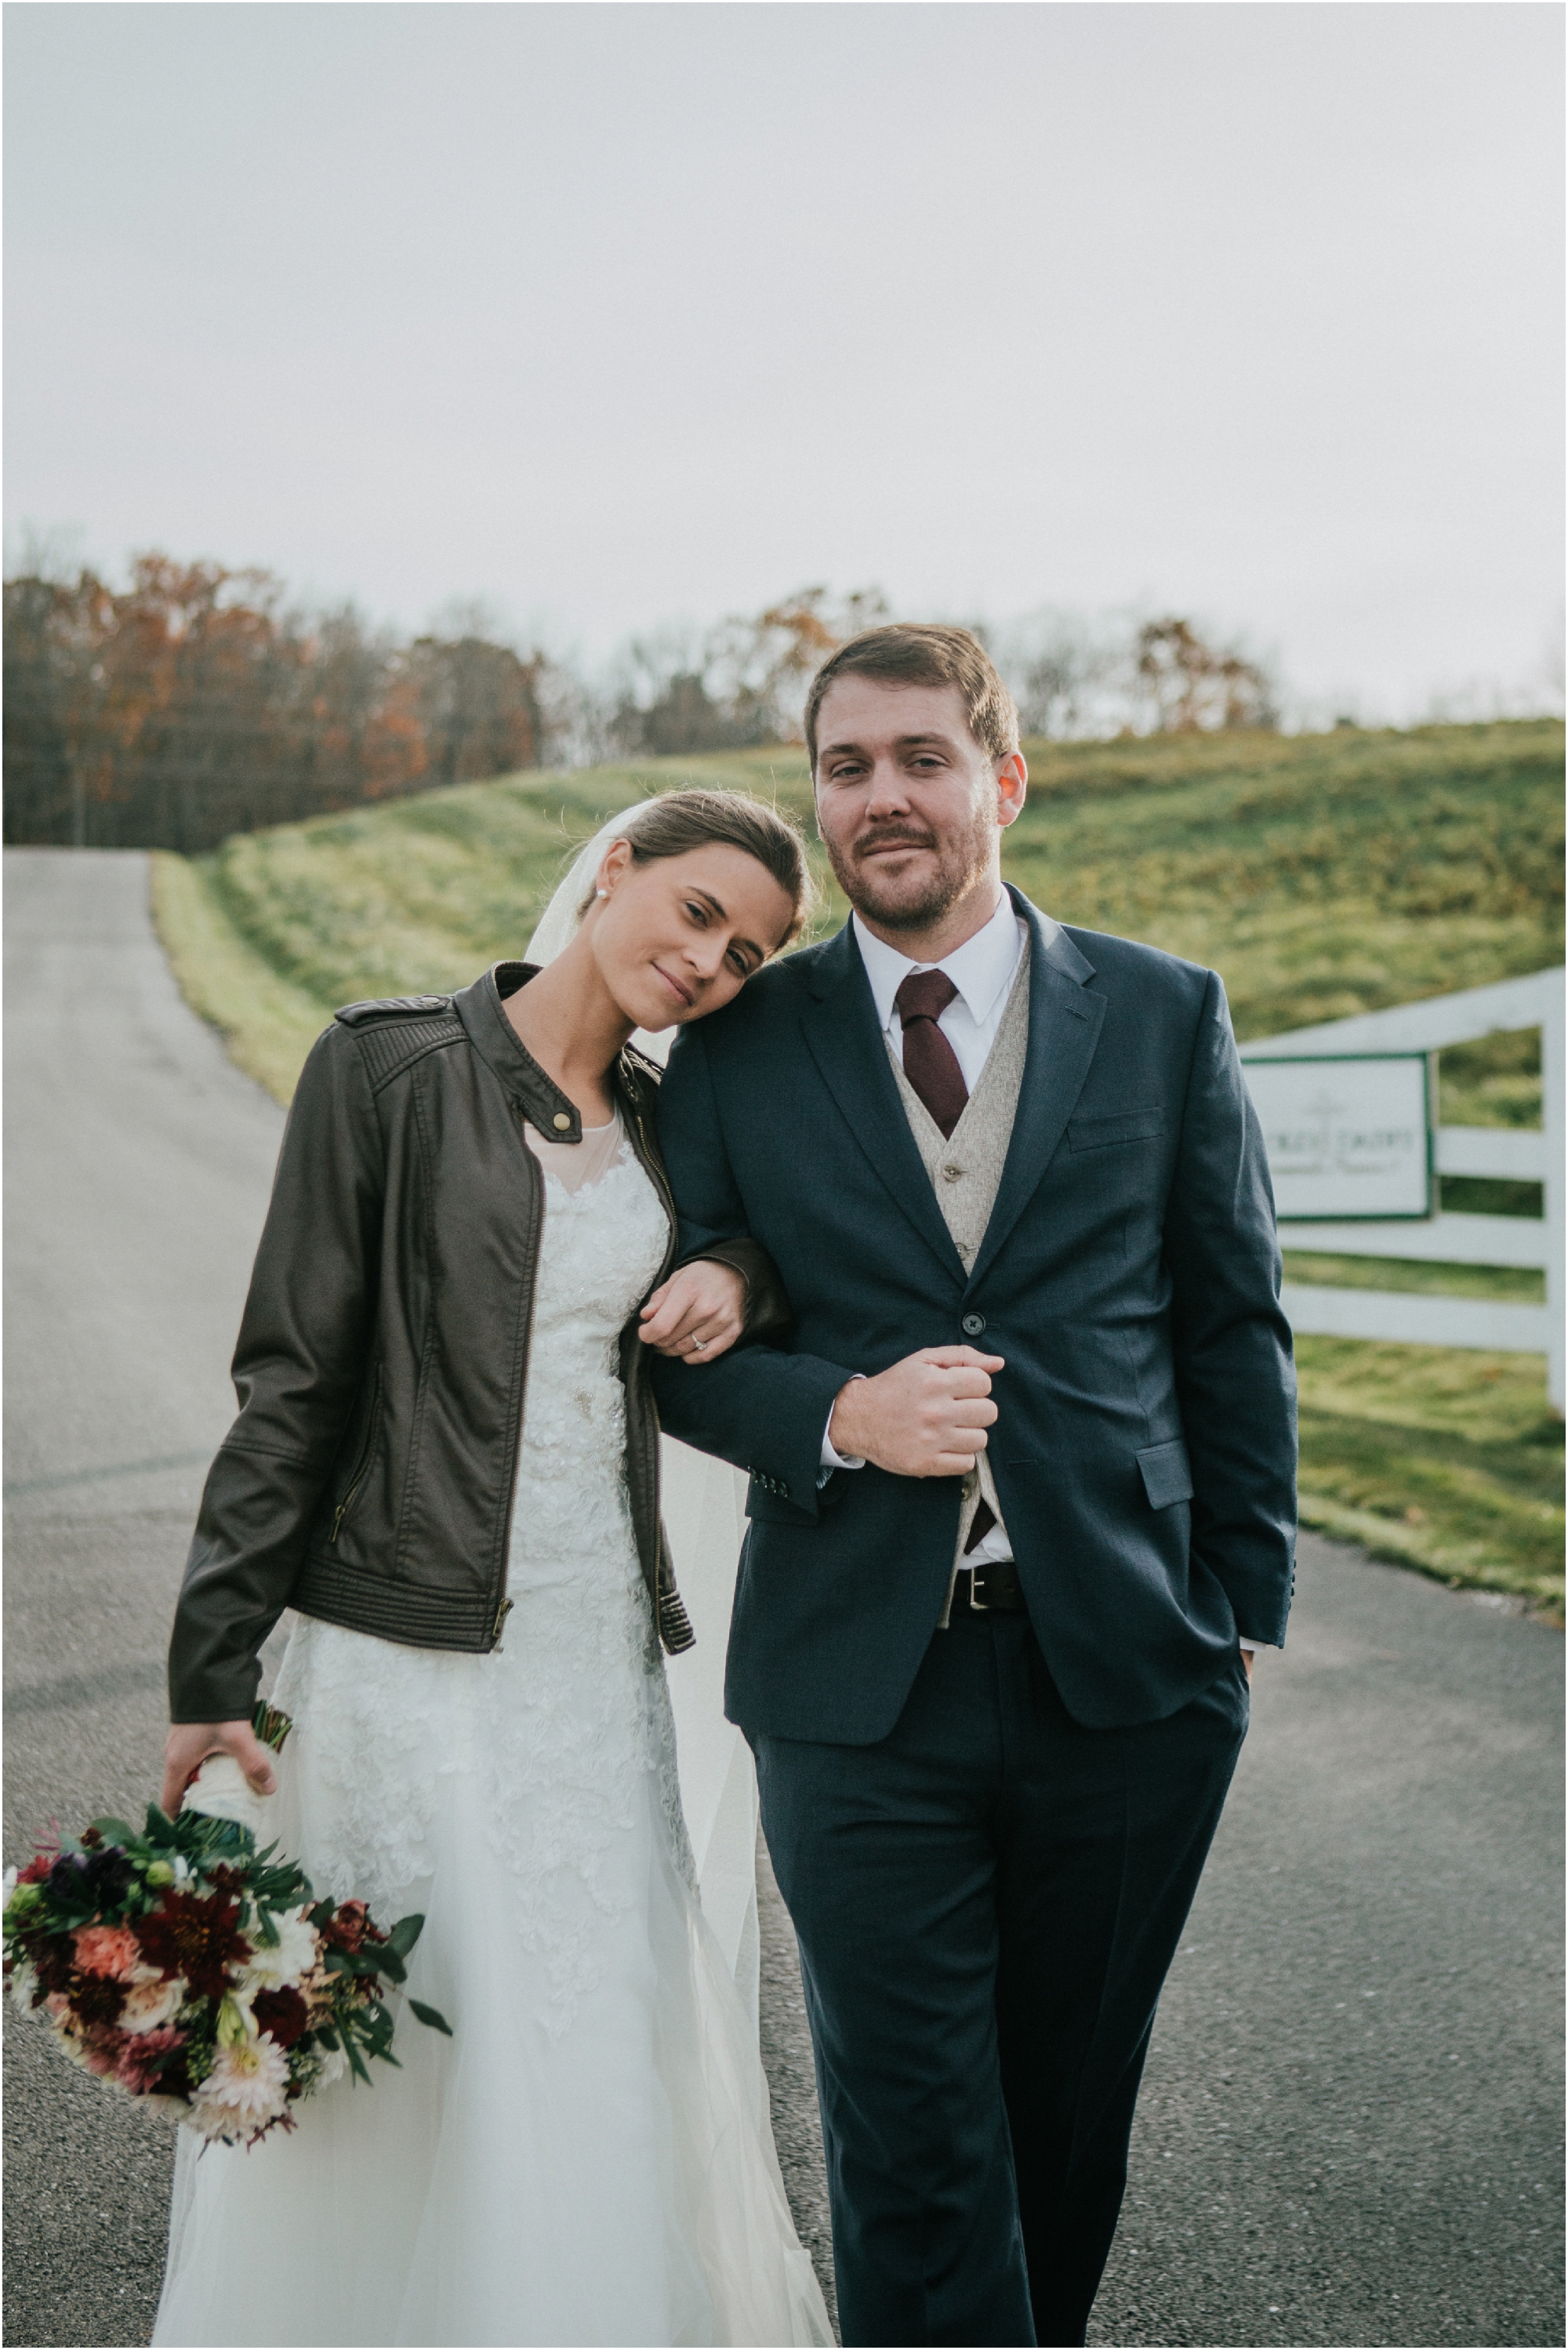 warm-springs-old-dairy-virginia-rustic-wedding-northeast-tennessee-elopement-adventuruous-photographer-katy-sergent_0043.jpg